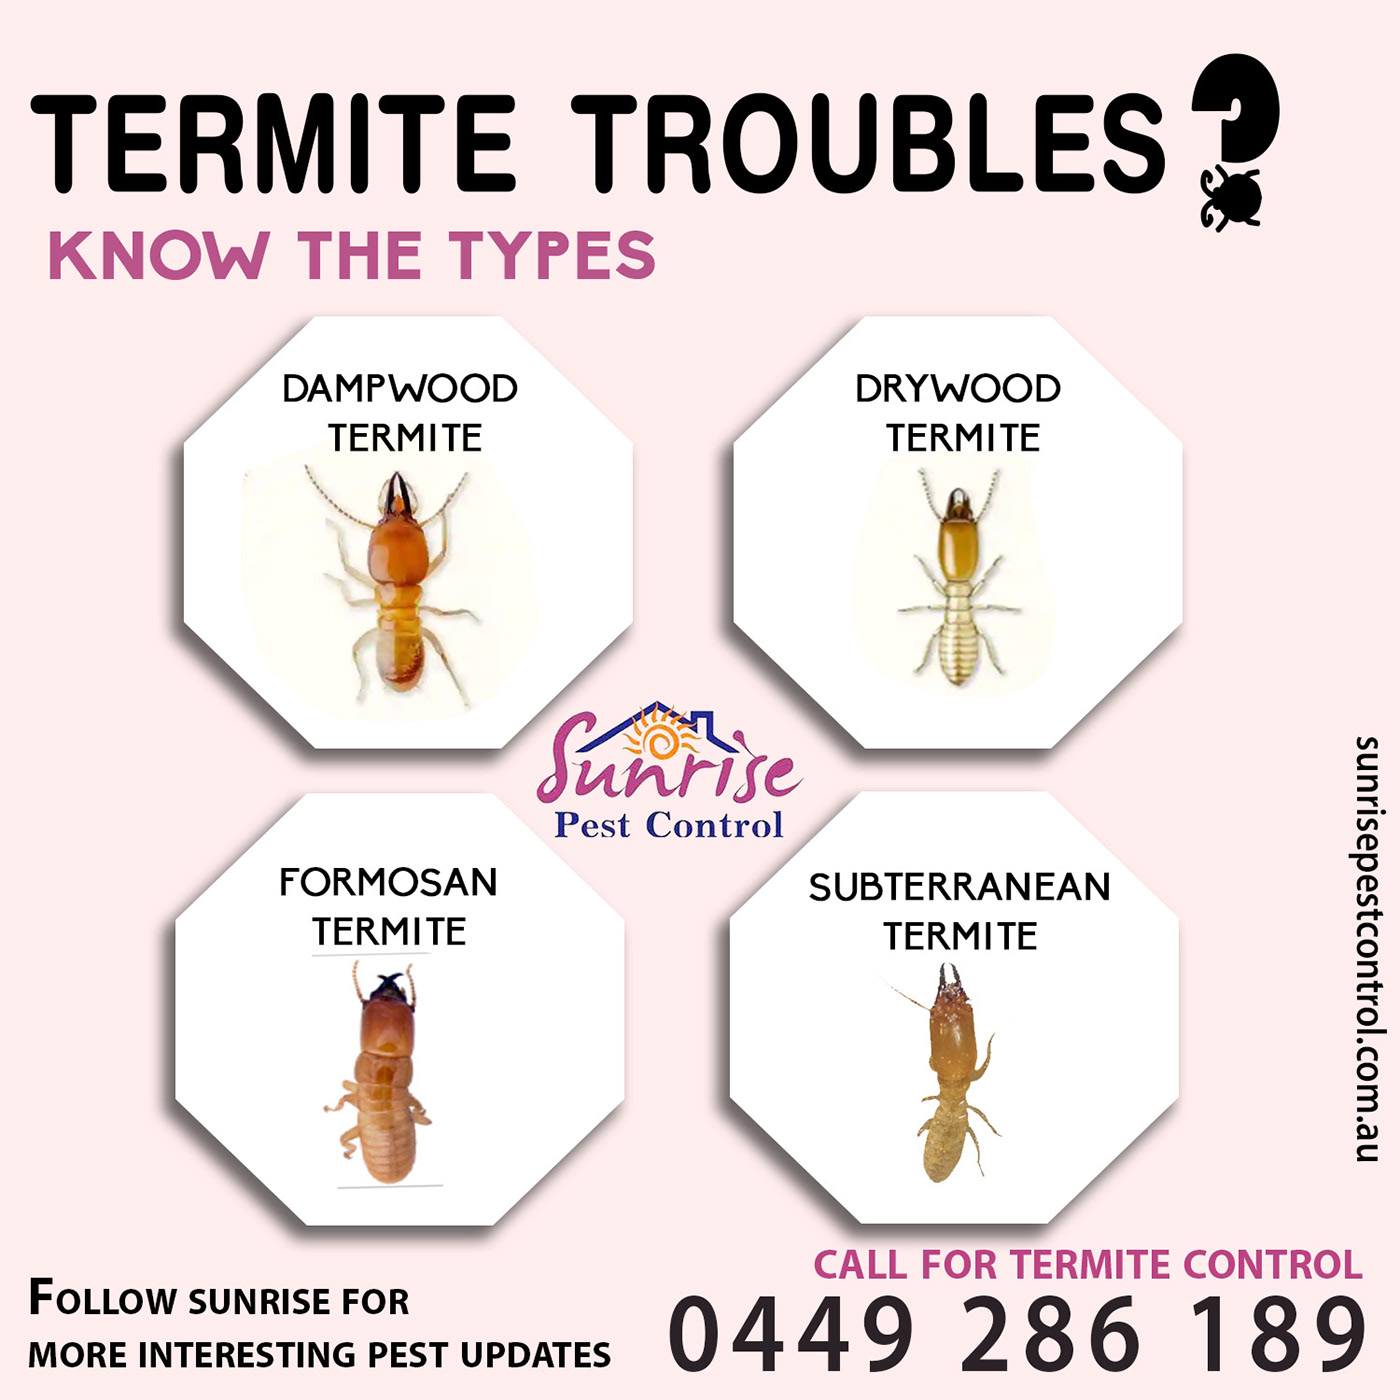 Termite Control Termite Pest Control pest control services Pest Termite Control Services Termite Treatment